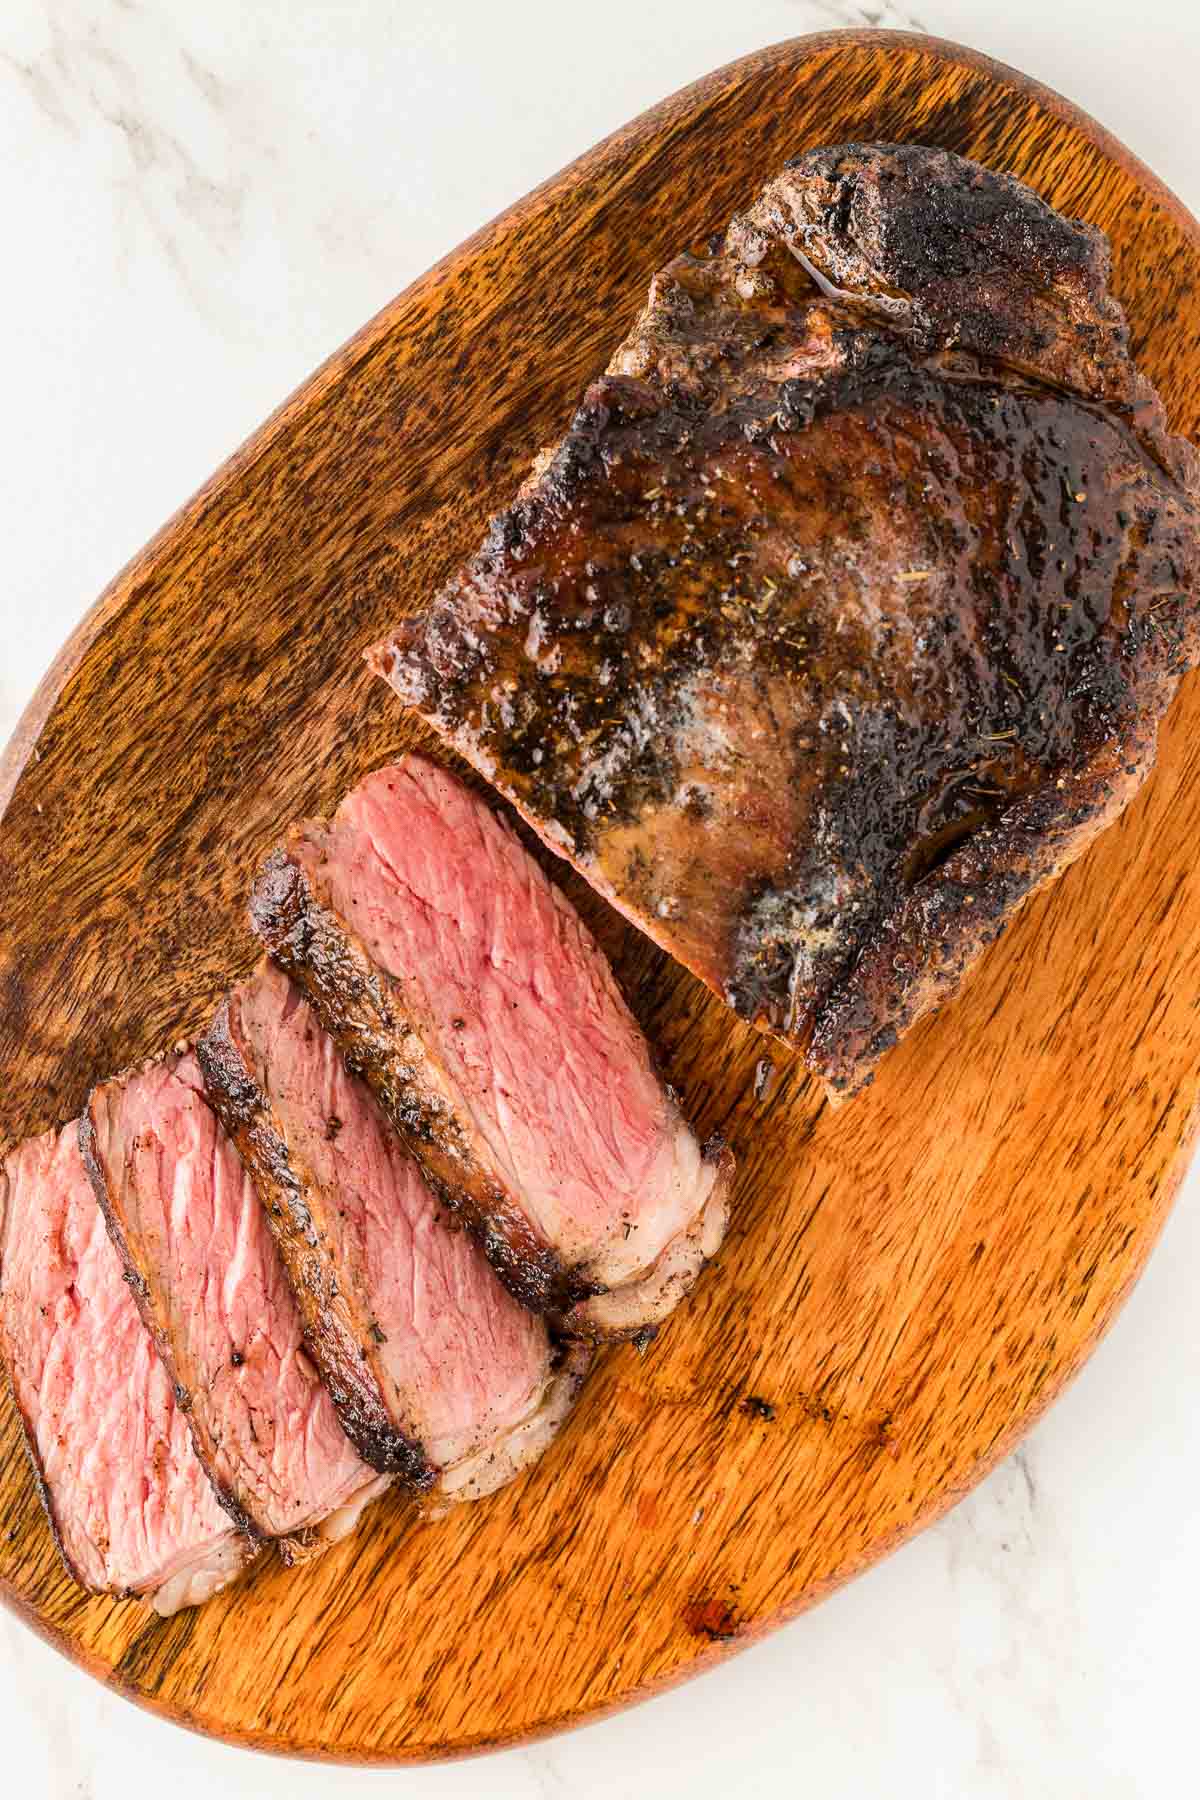 A piece of blackened steak on a wooden cutting board.